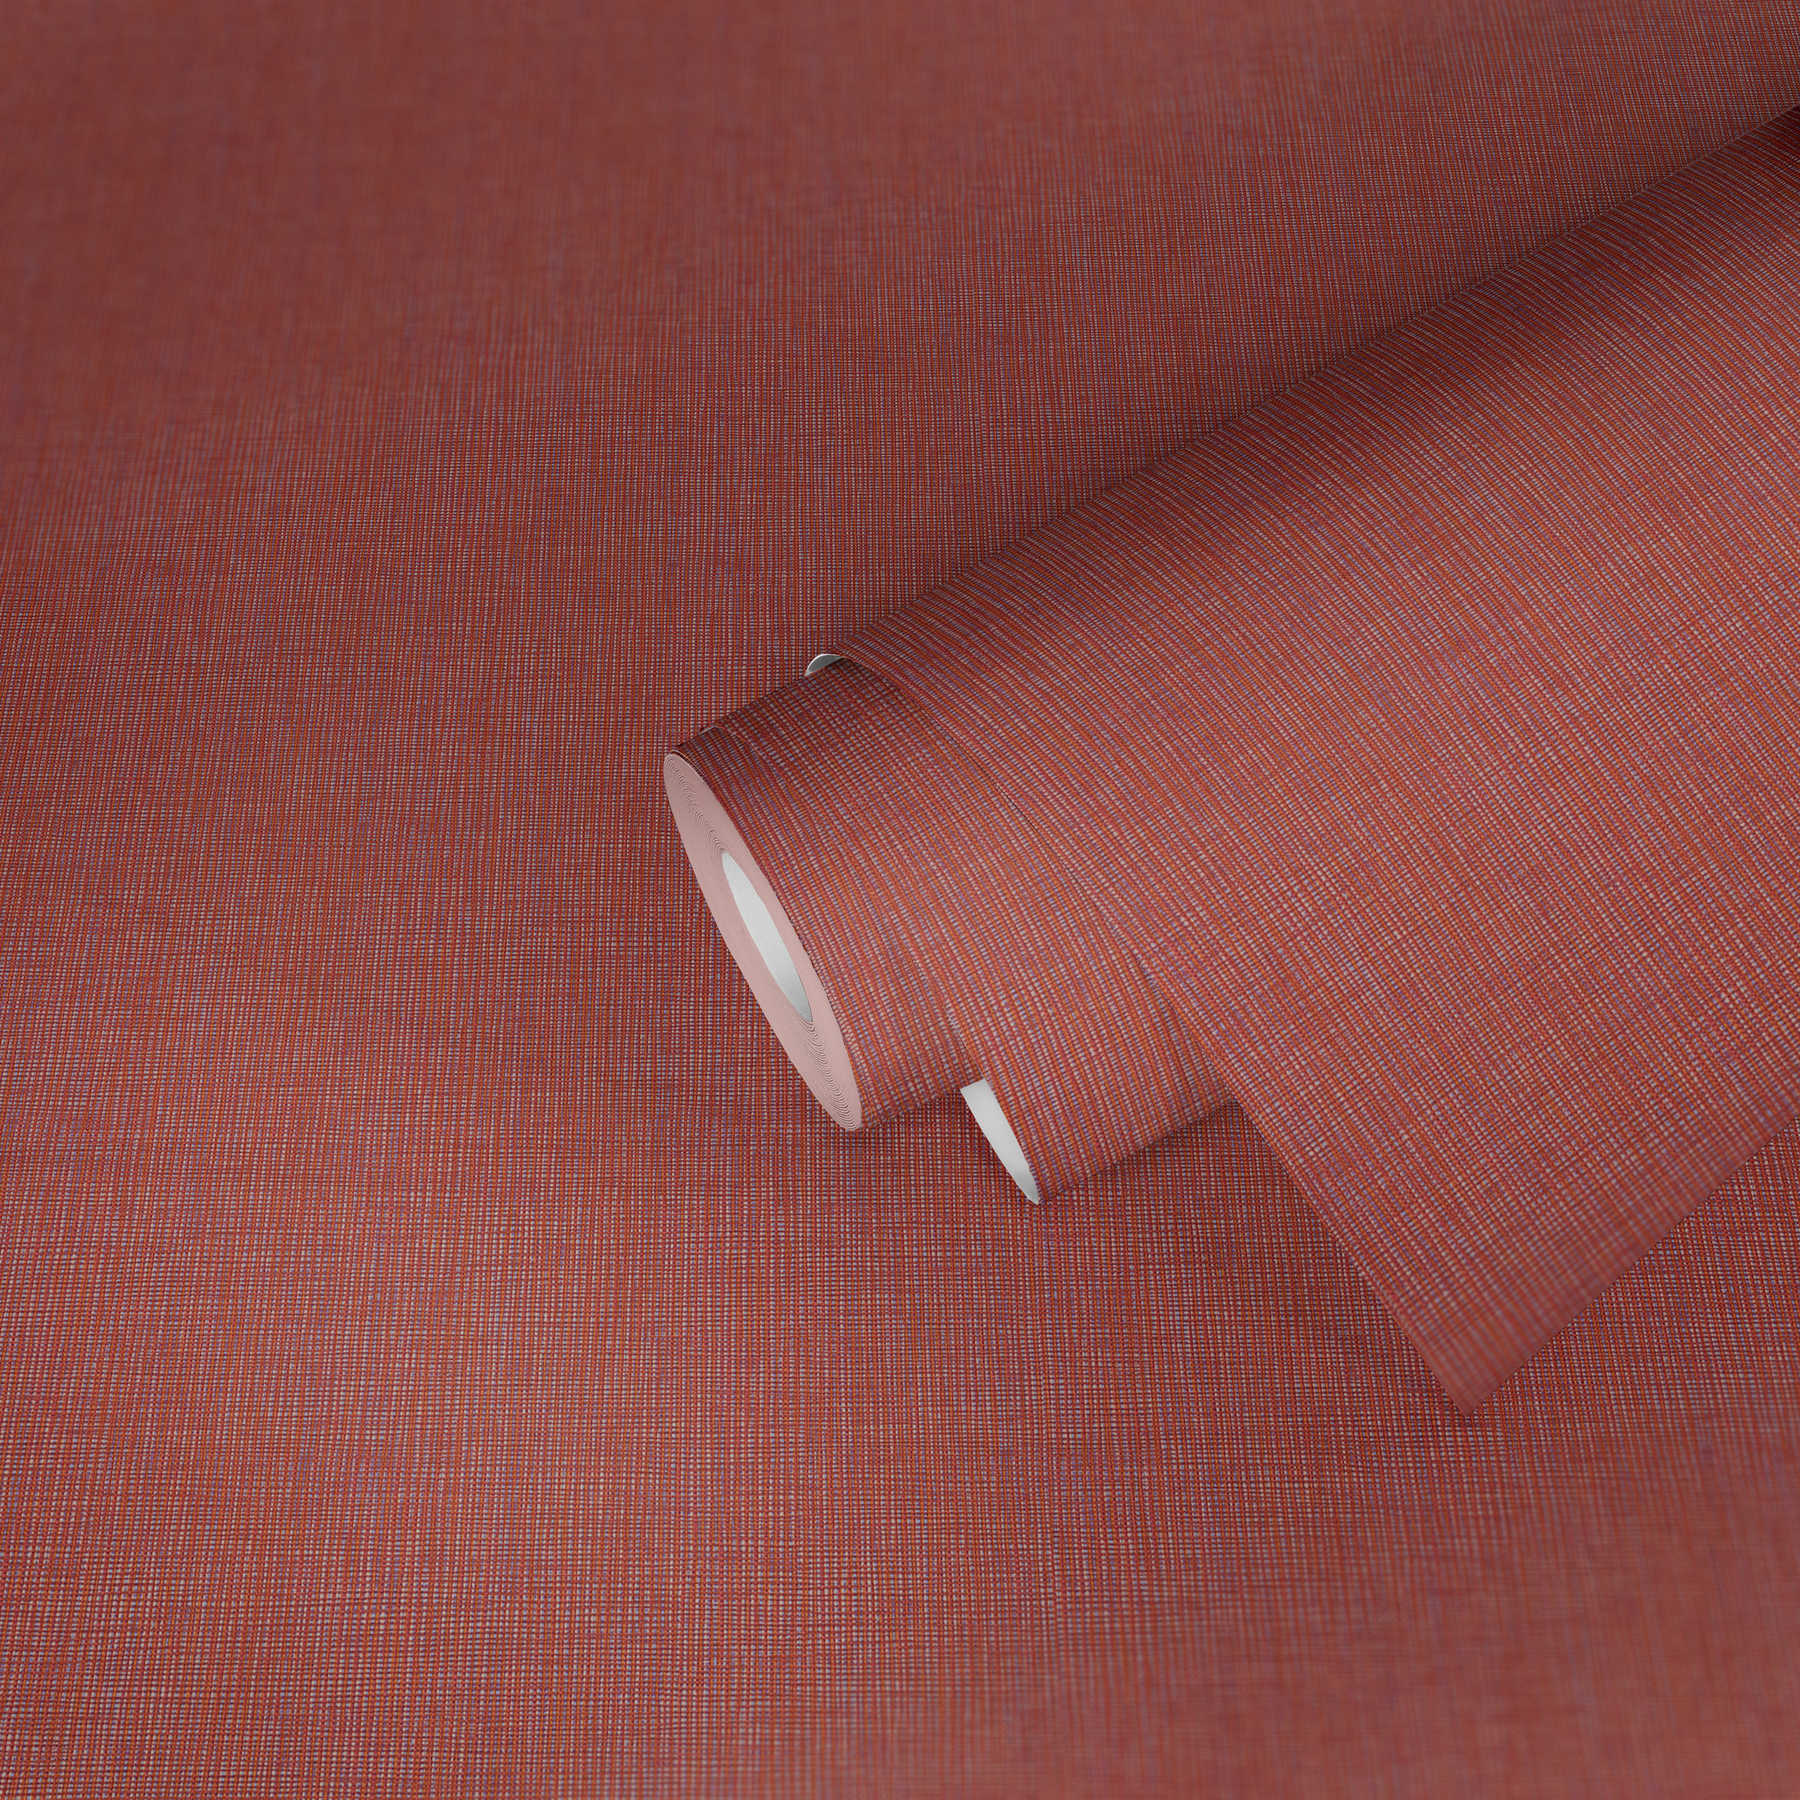             Behang Rood met Textiel Patroon in Rood Oranje & Paars
        